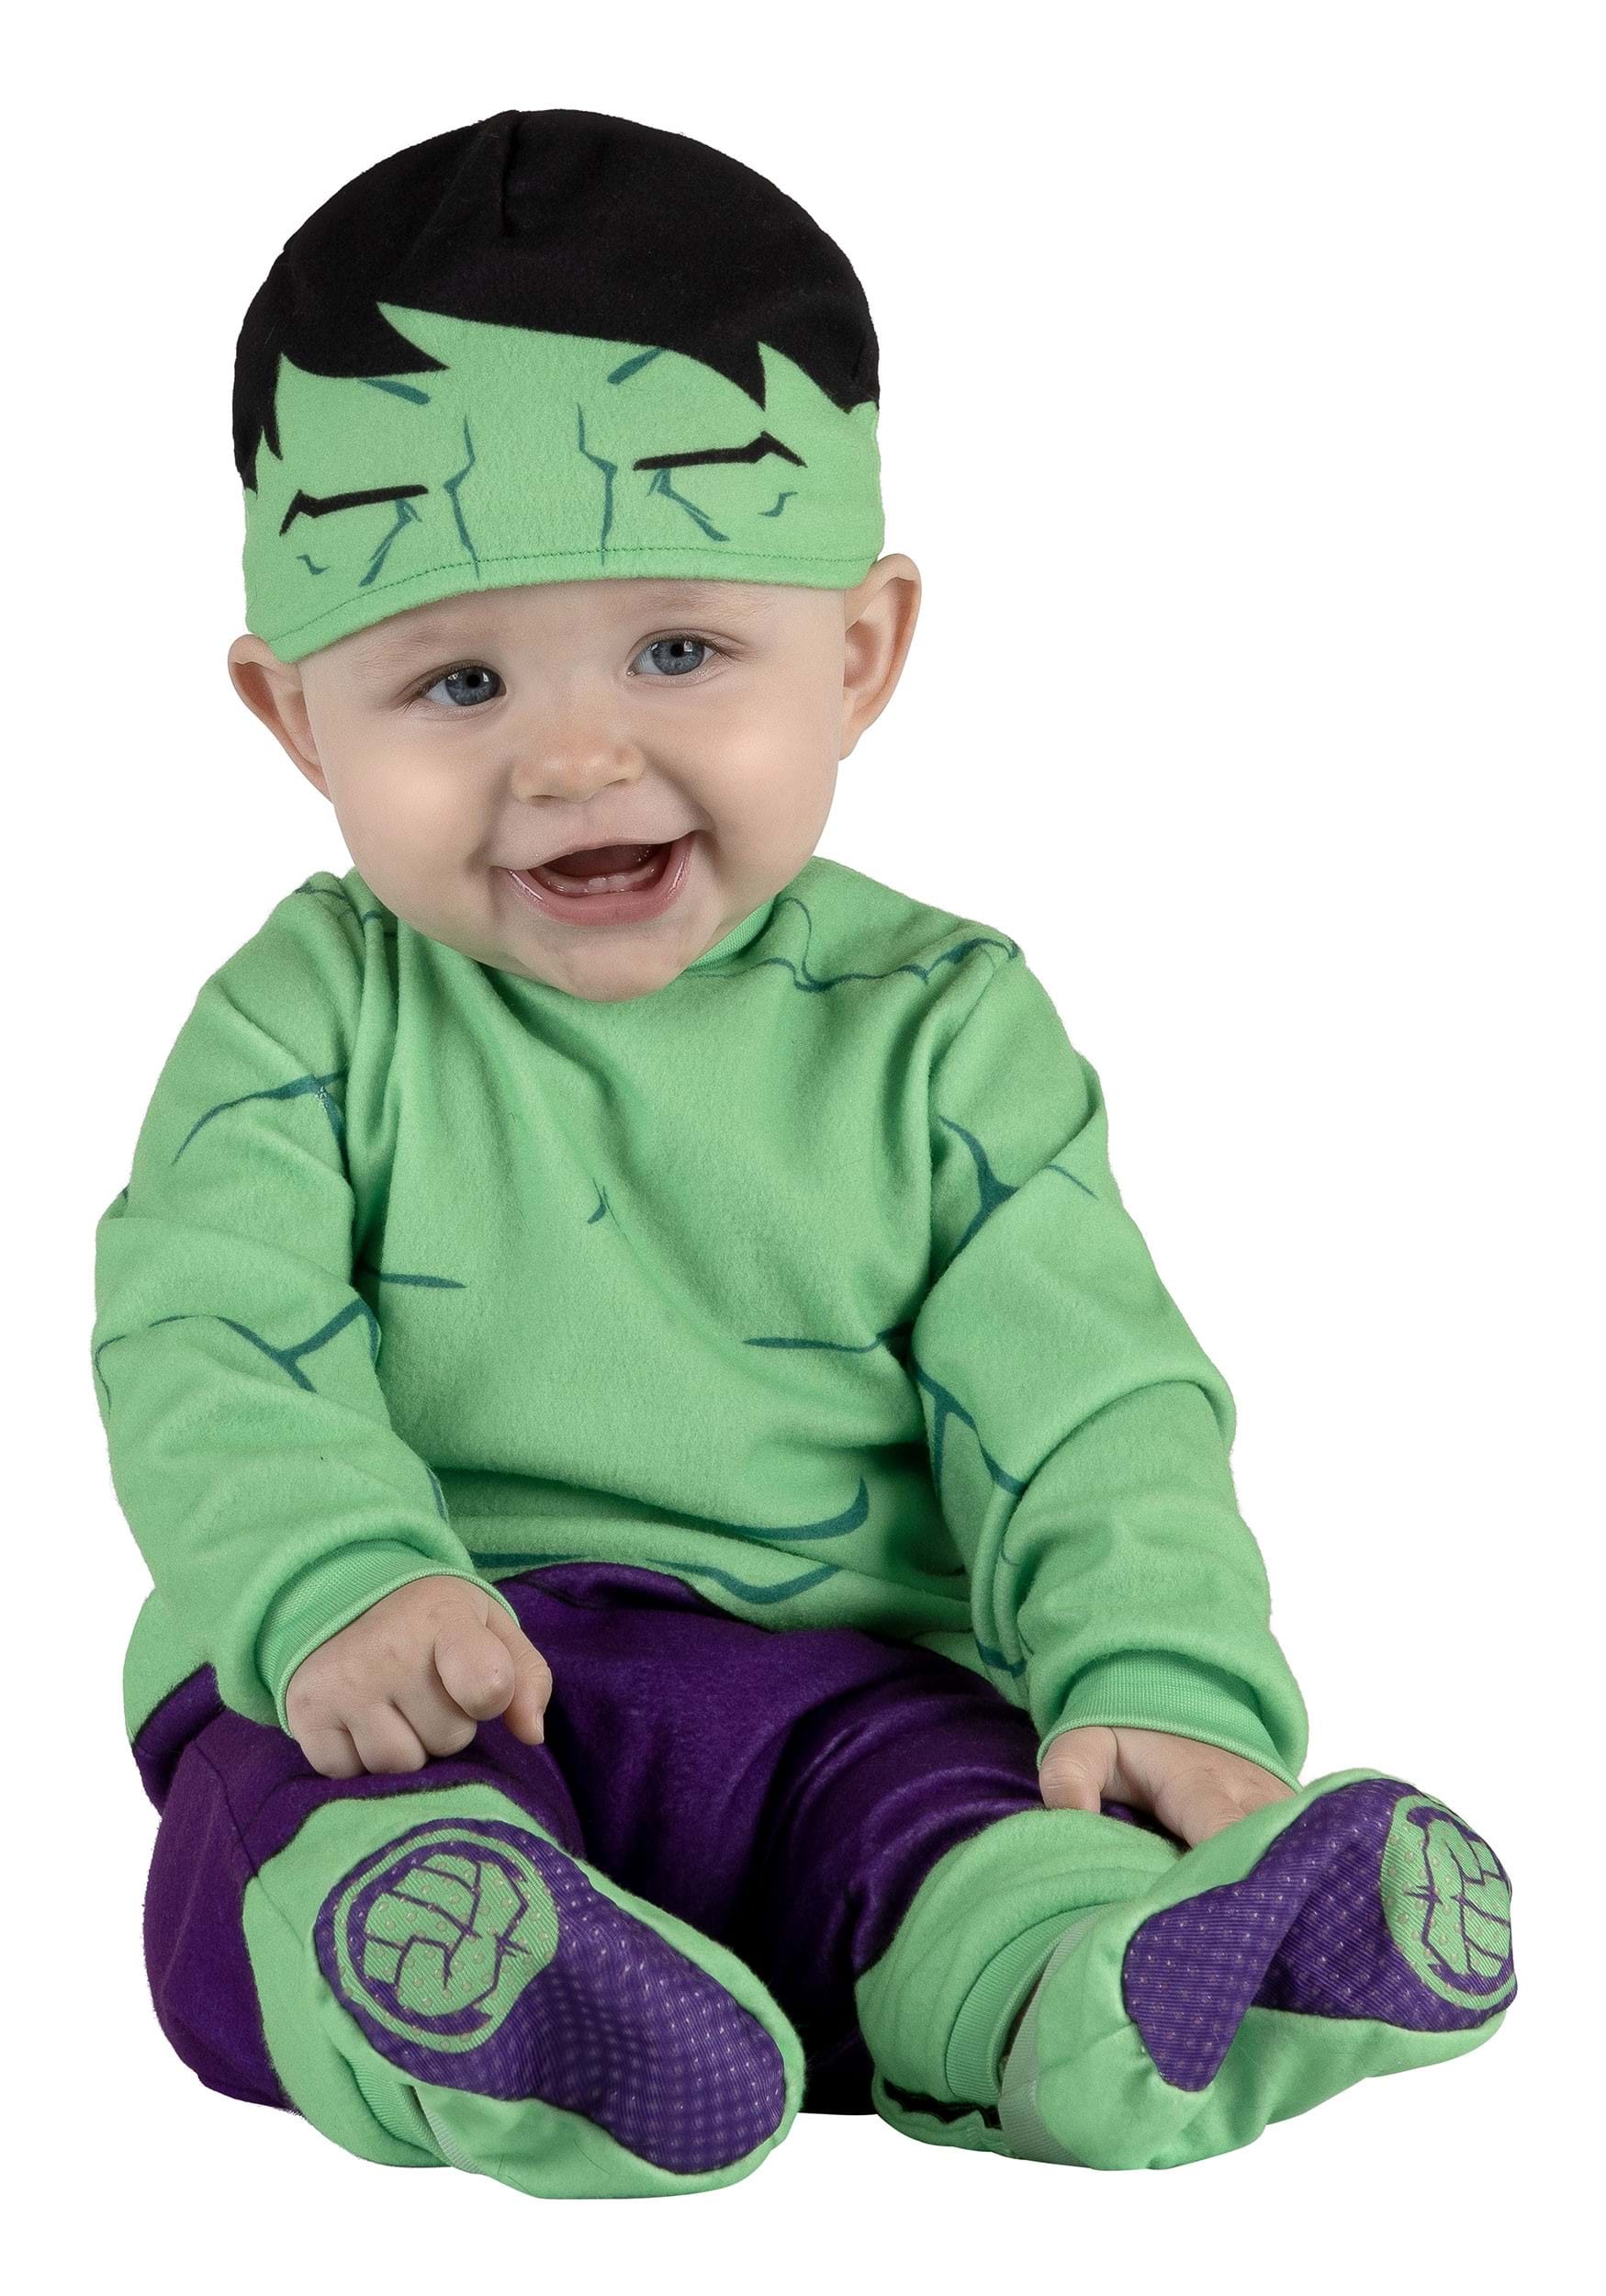 The Incredible Hulk Toddler Costume